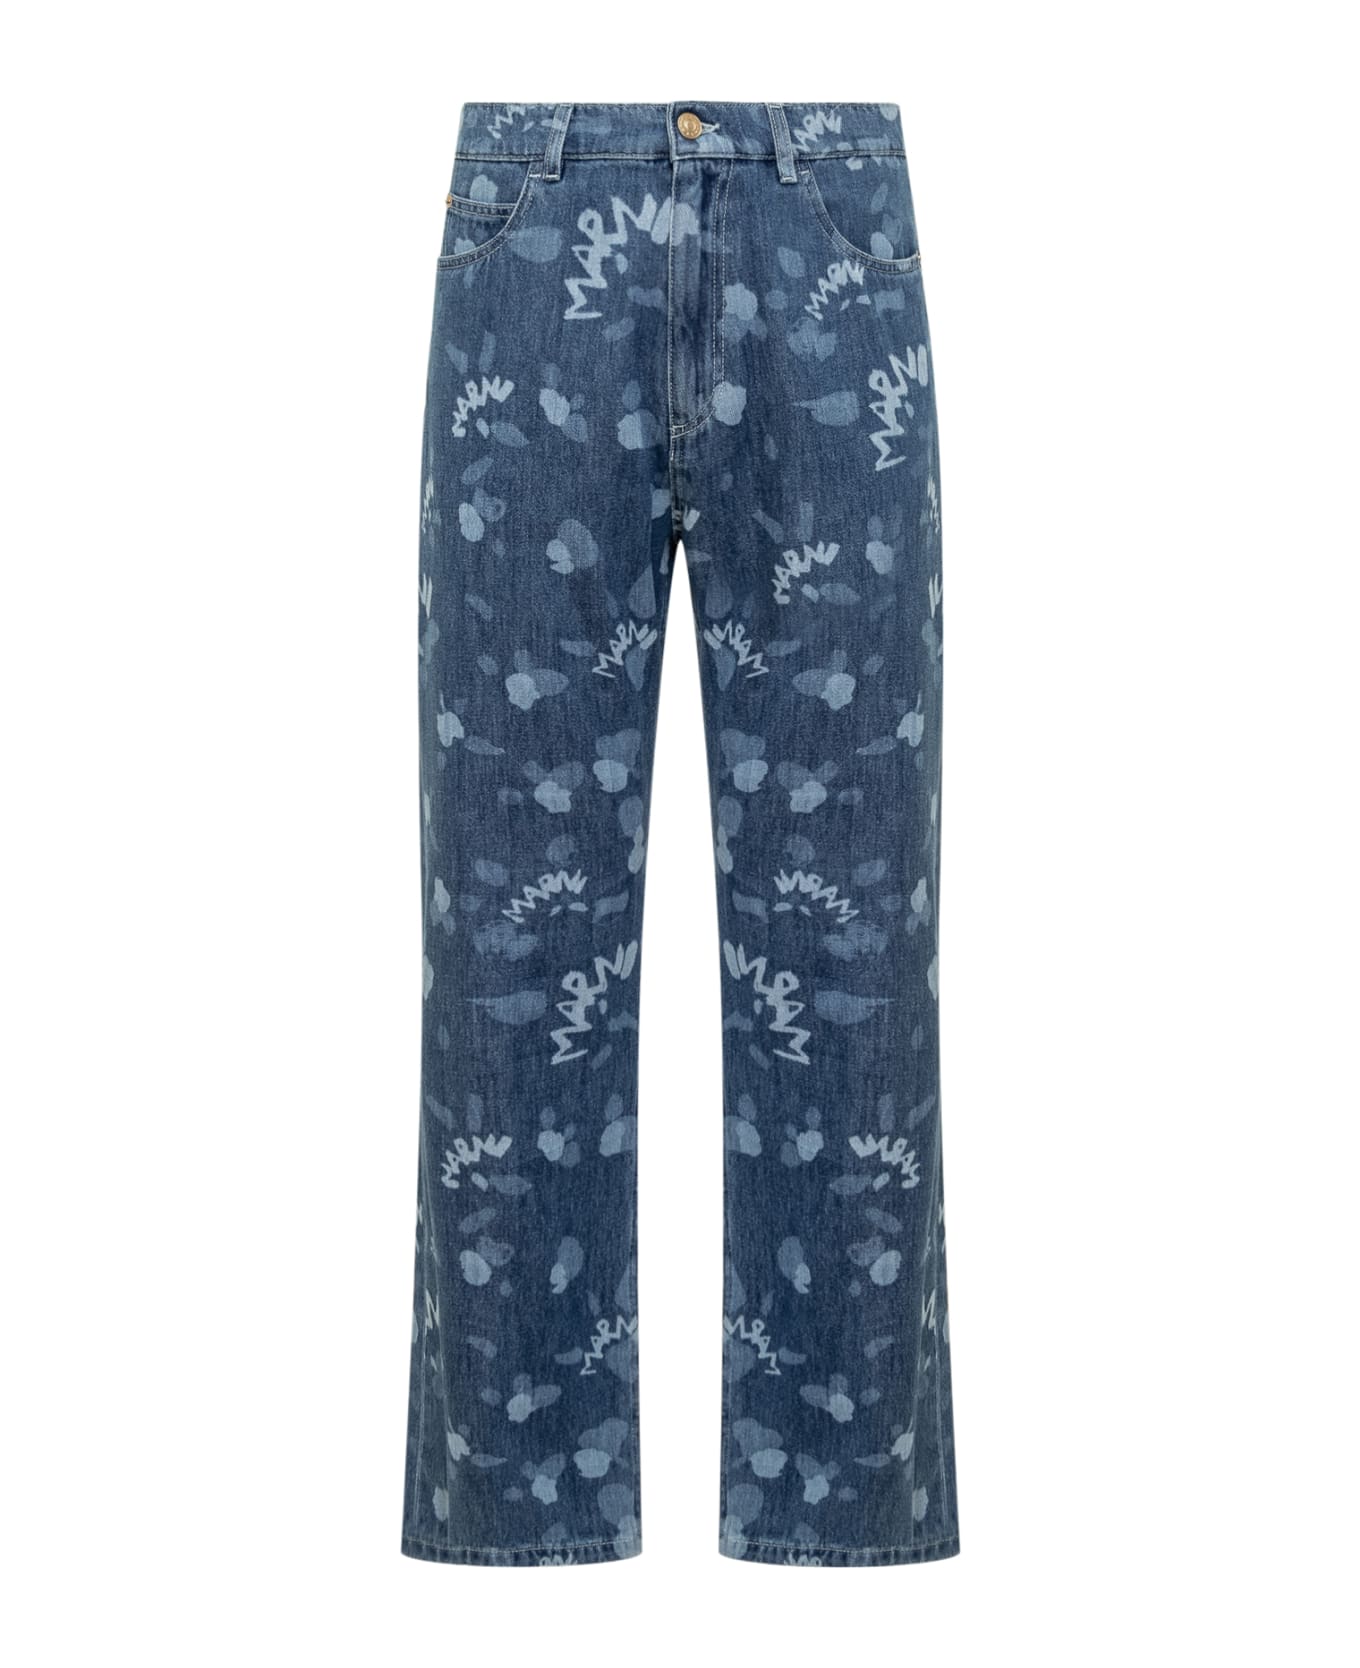 Marni Jeans With Marni Dripping Print - IRIS BLUE ボトムス